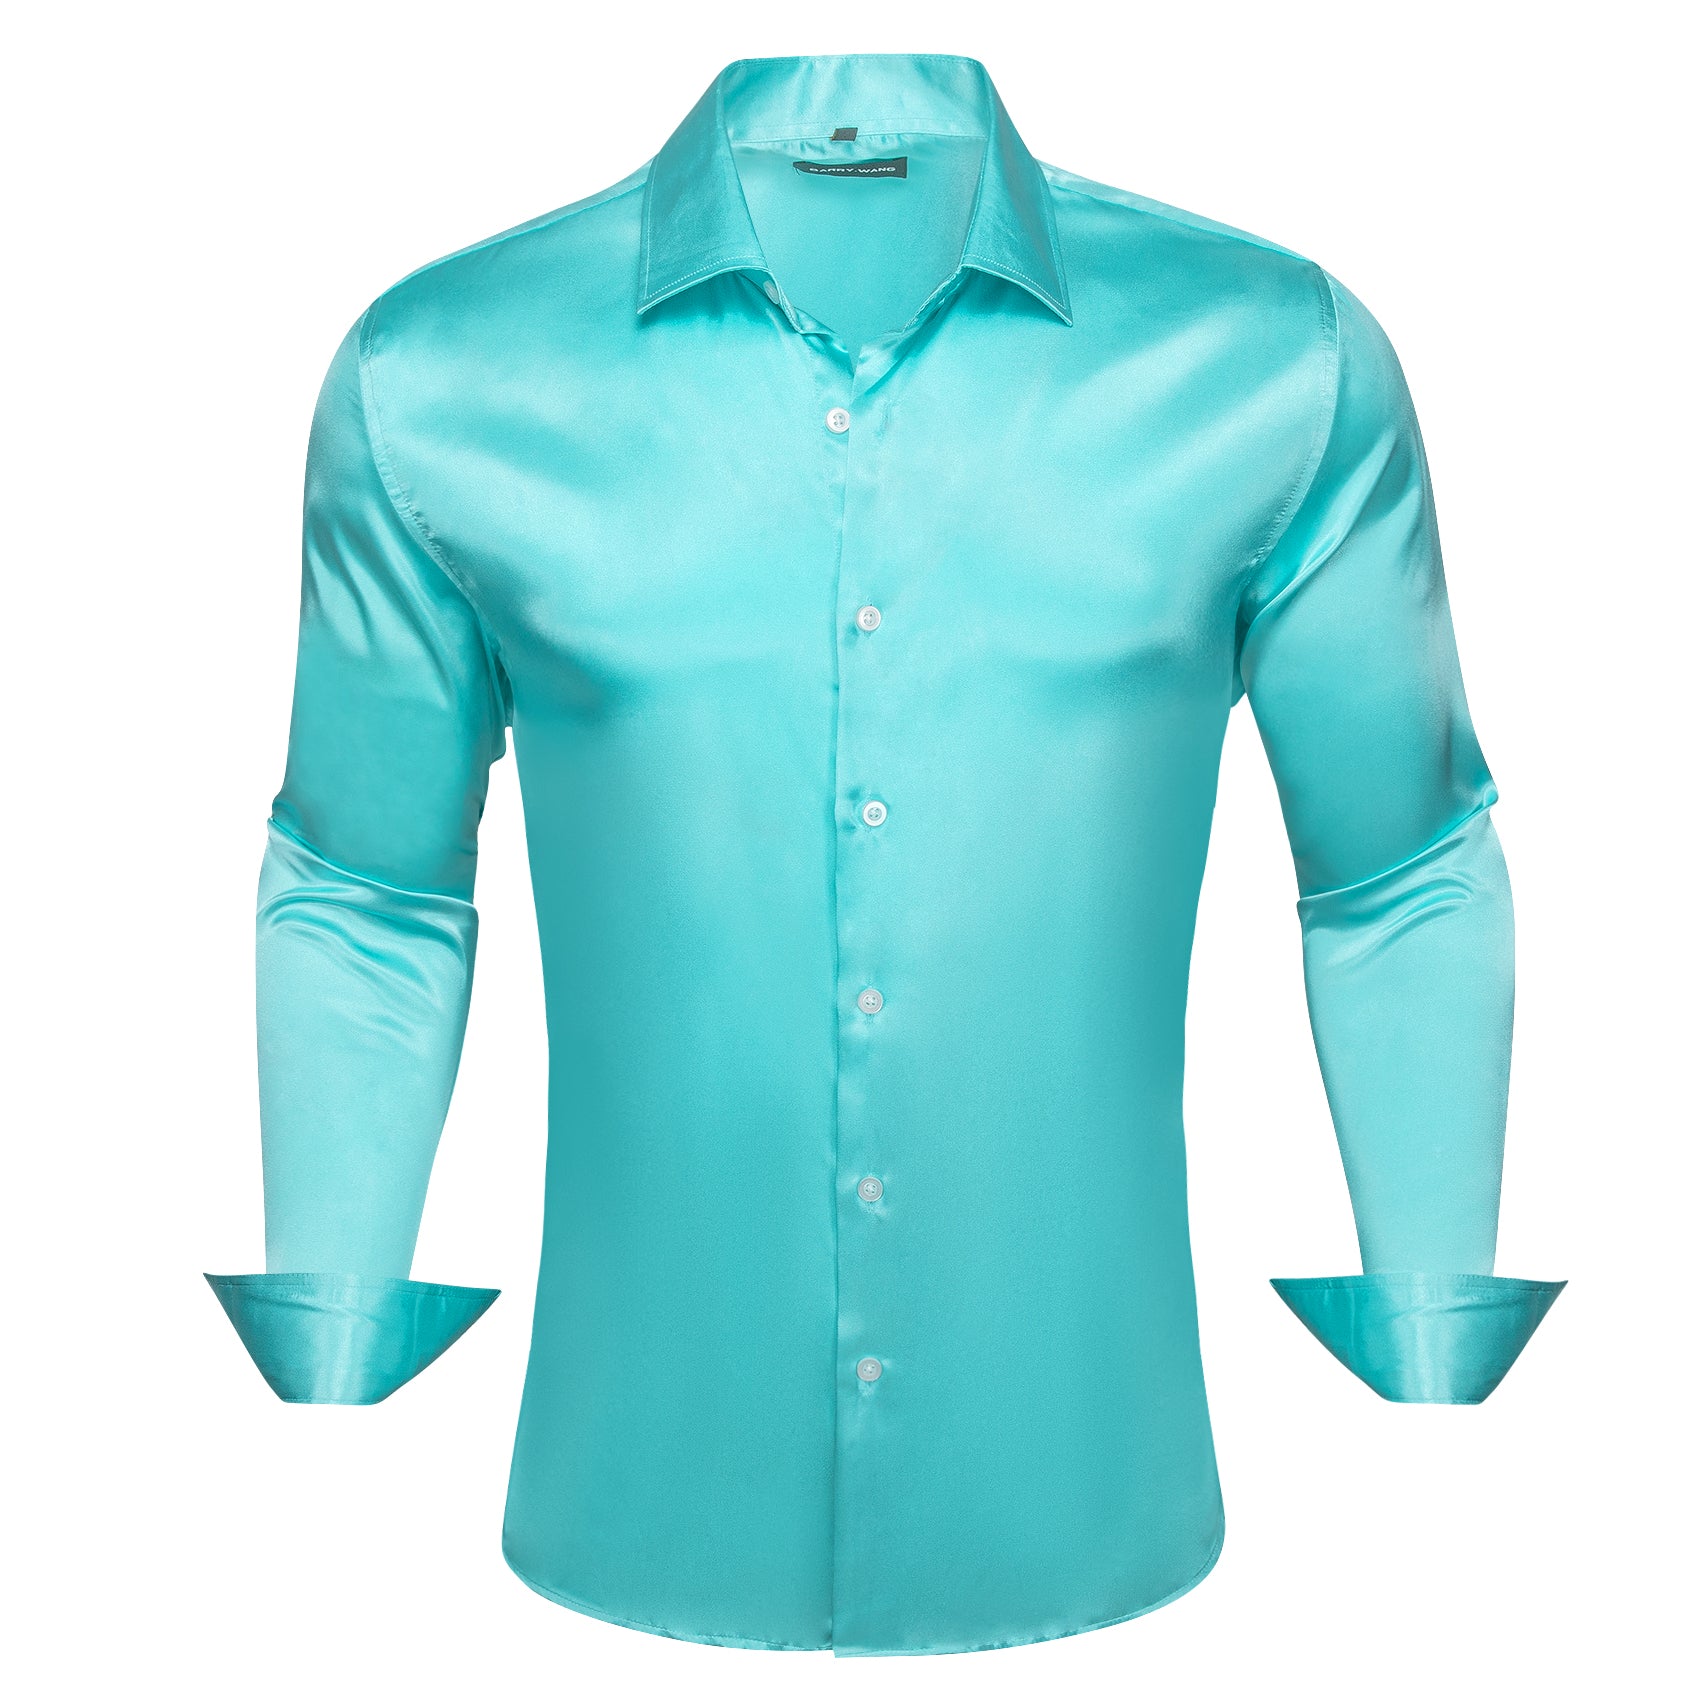 Barry.wang Button Down Shirt Cyan Blue Solid Silk Men's Long Sleeve Shirt